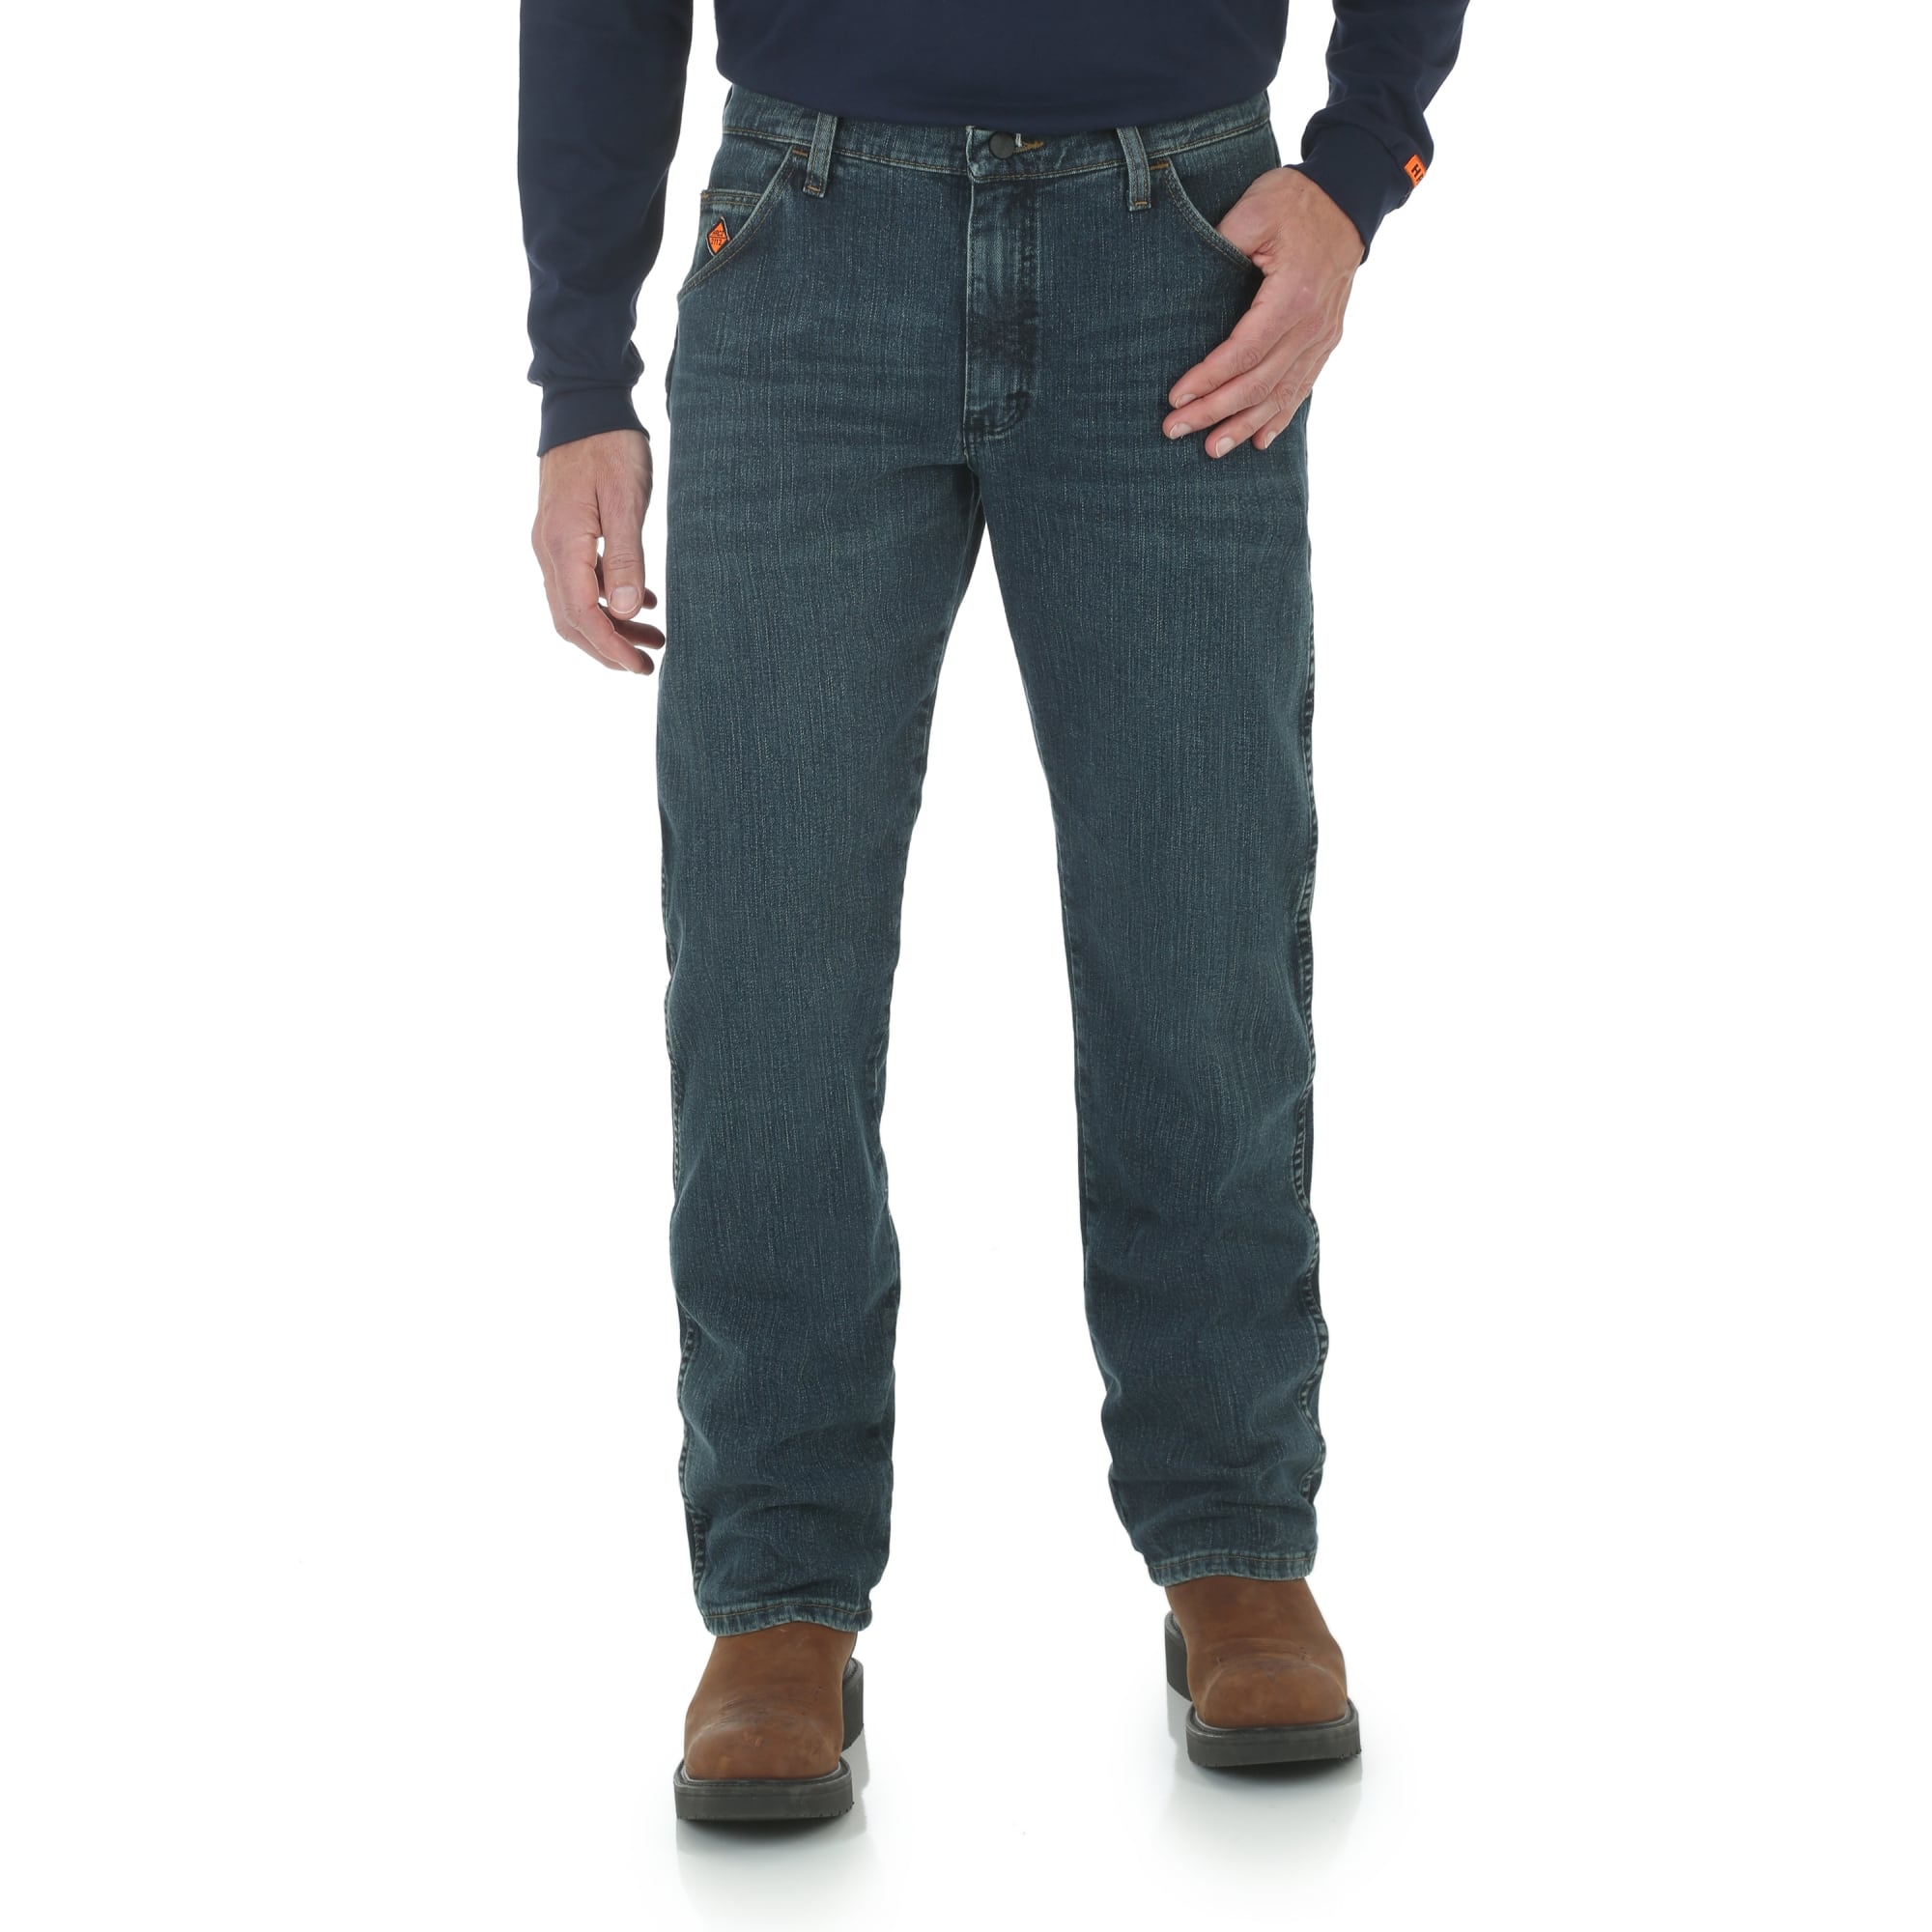 wrangler comfort jeans